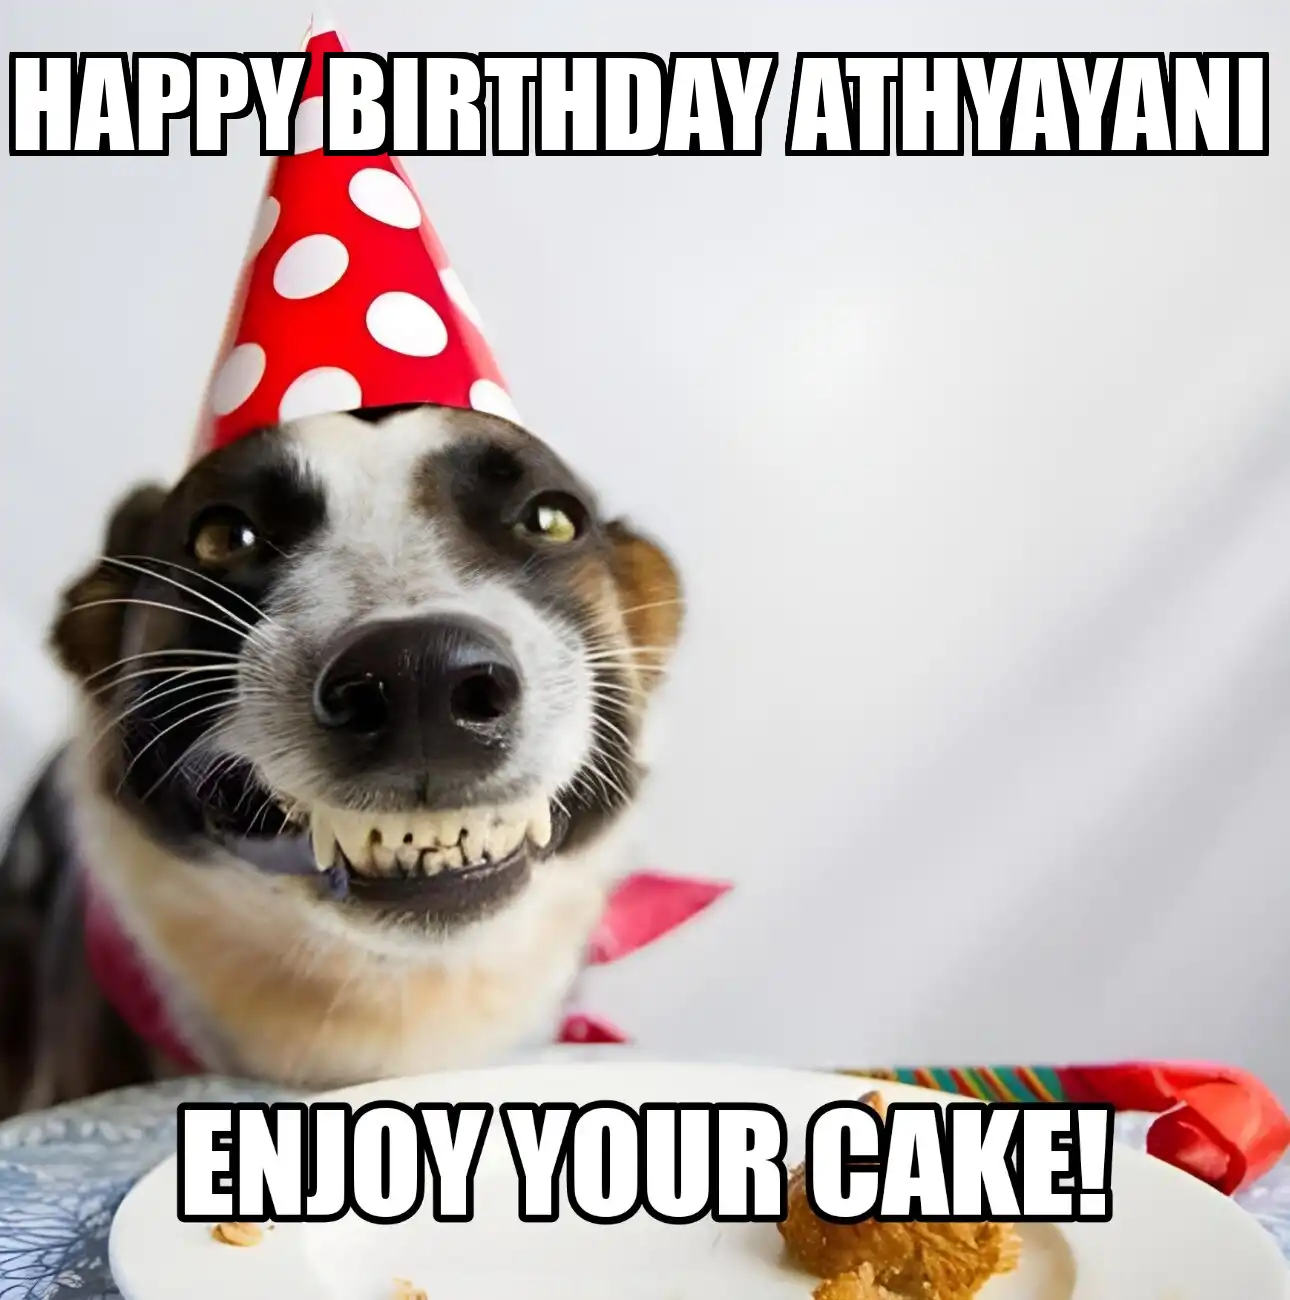 Happy Birthday Athyayani Enjoy Your Cake Dog Meme